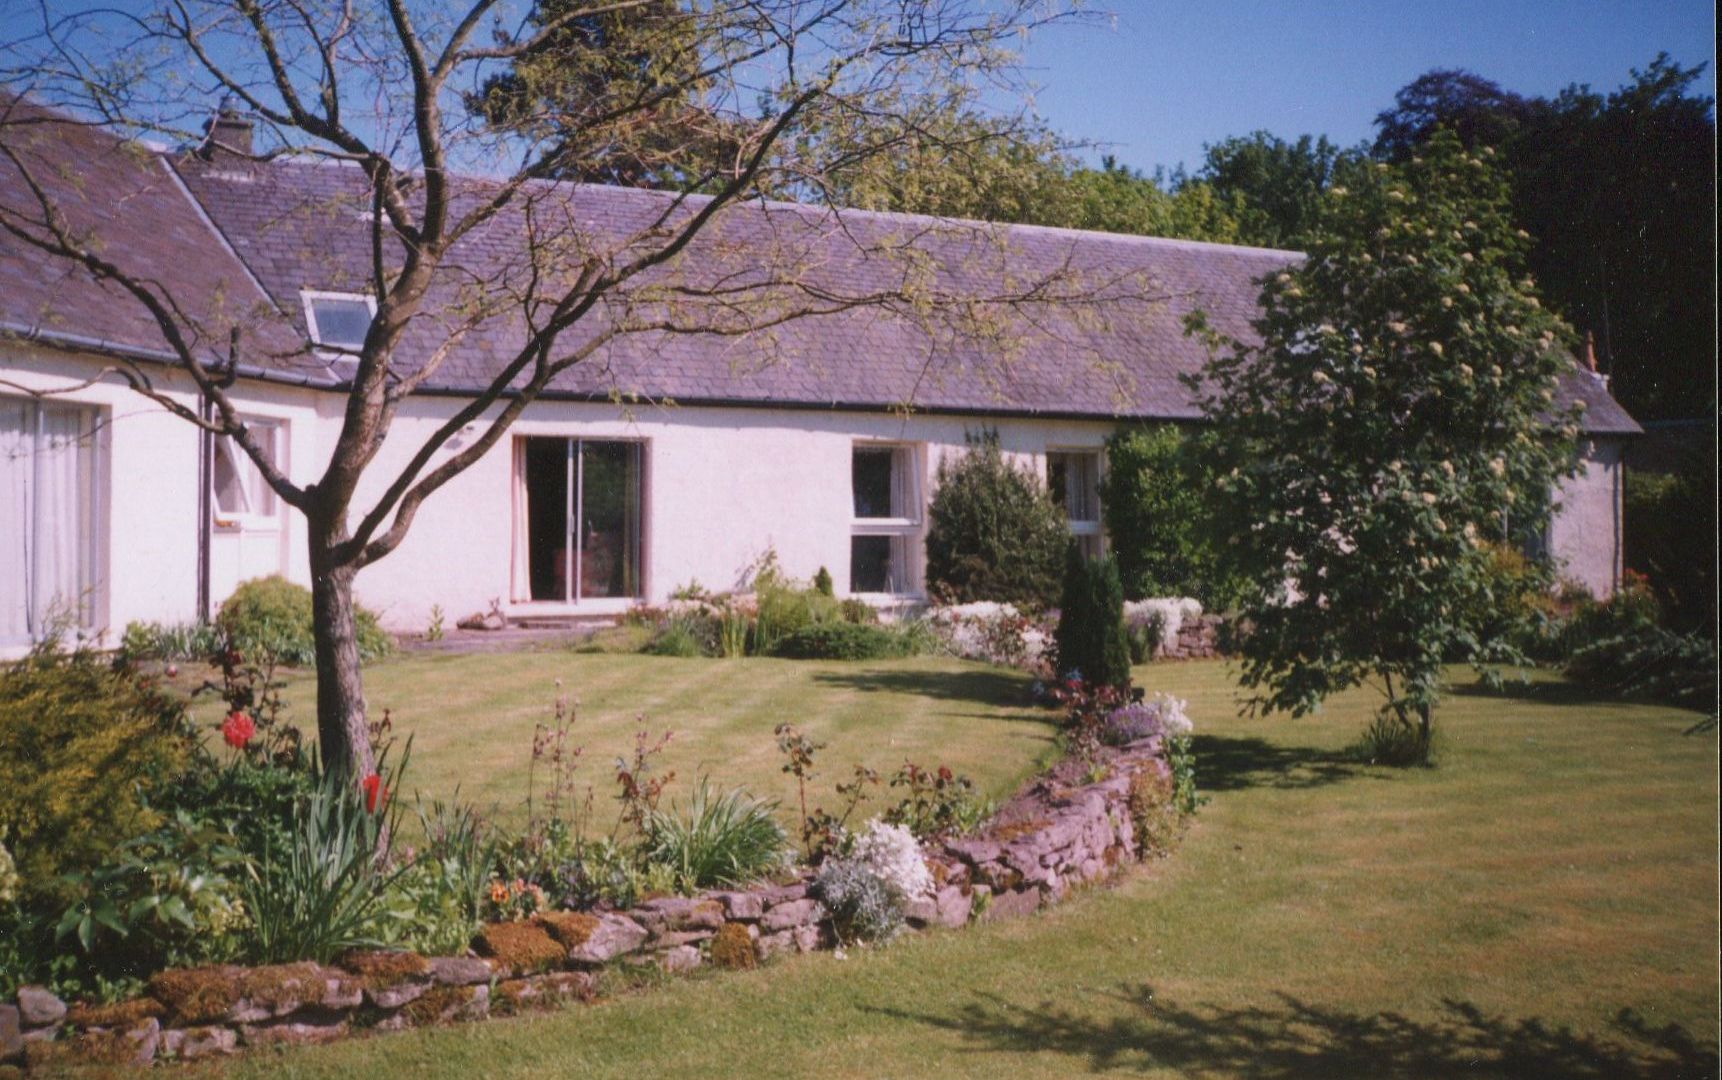 Weaver's Cottage